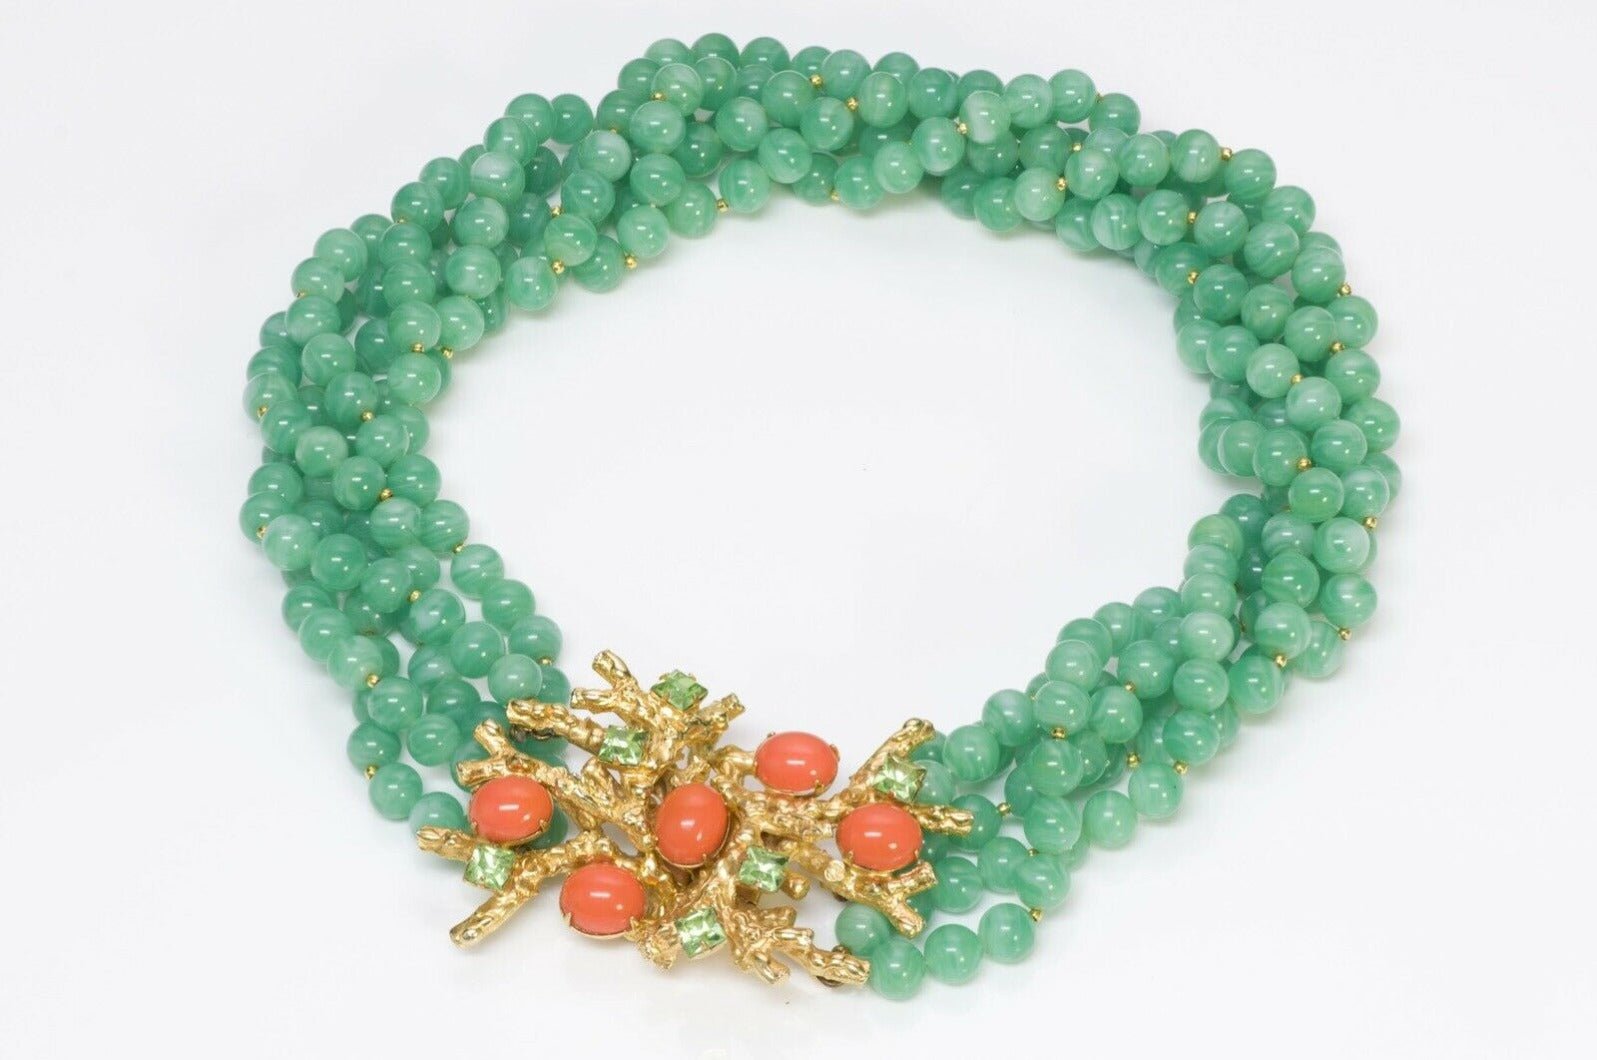 William DeLillo 1972 Green Glass Beads Necklace